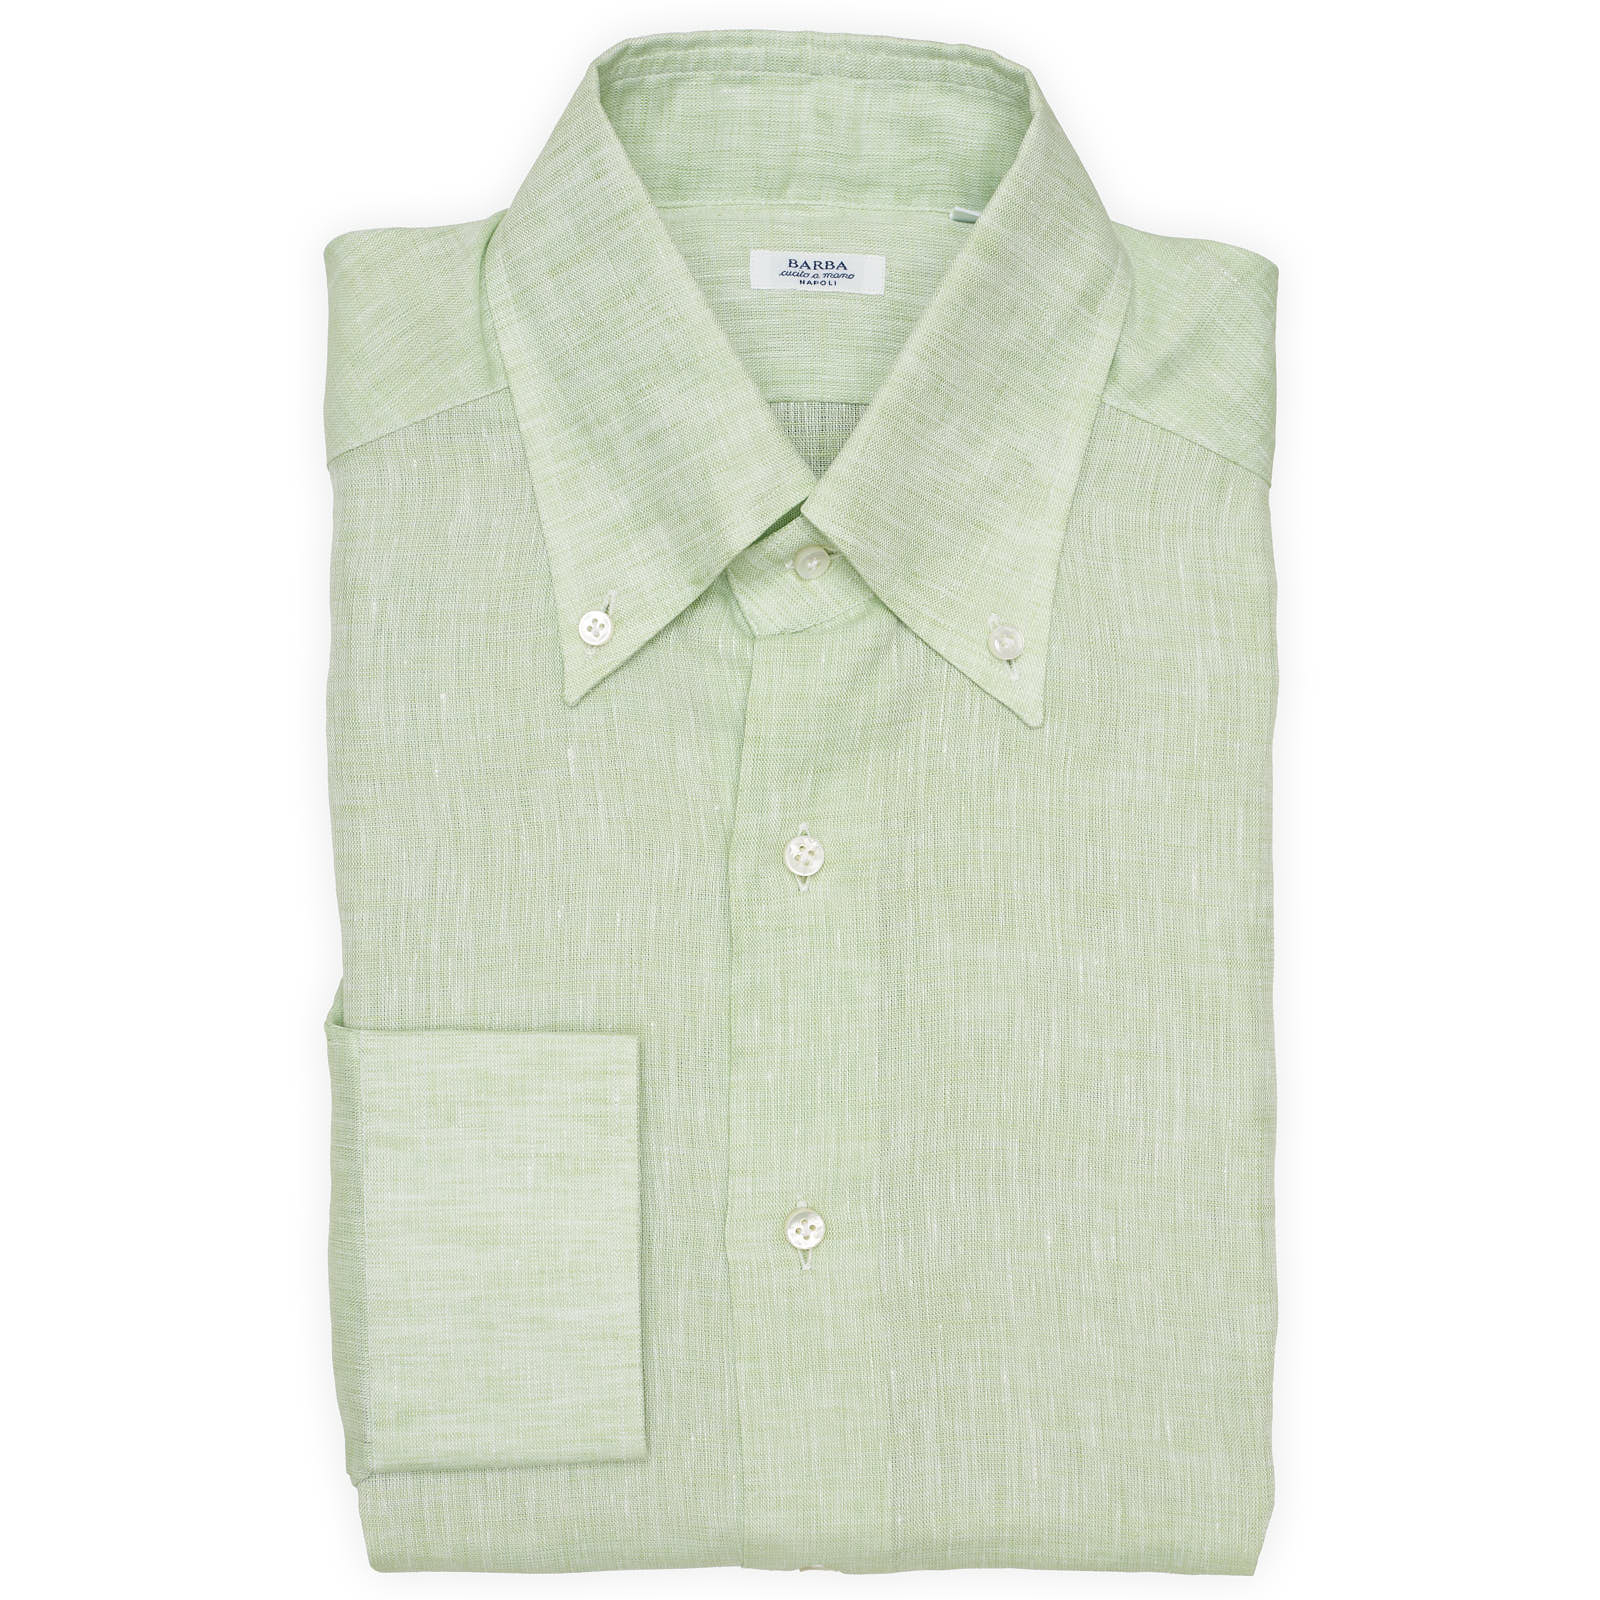 BARBA Napoli Green Hopsack Linen Button-Down Casual Shirt EU 39 NEW US 15.5